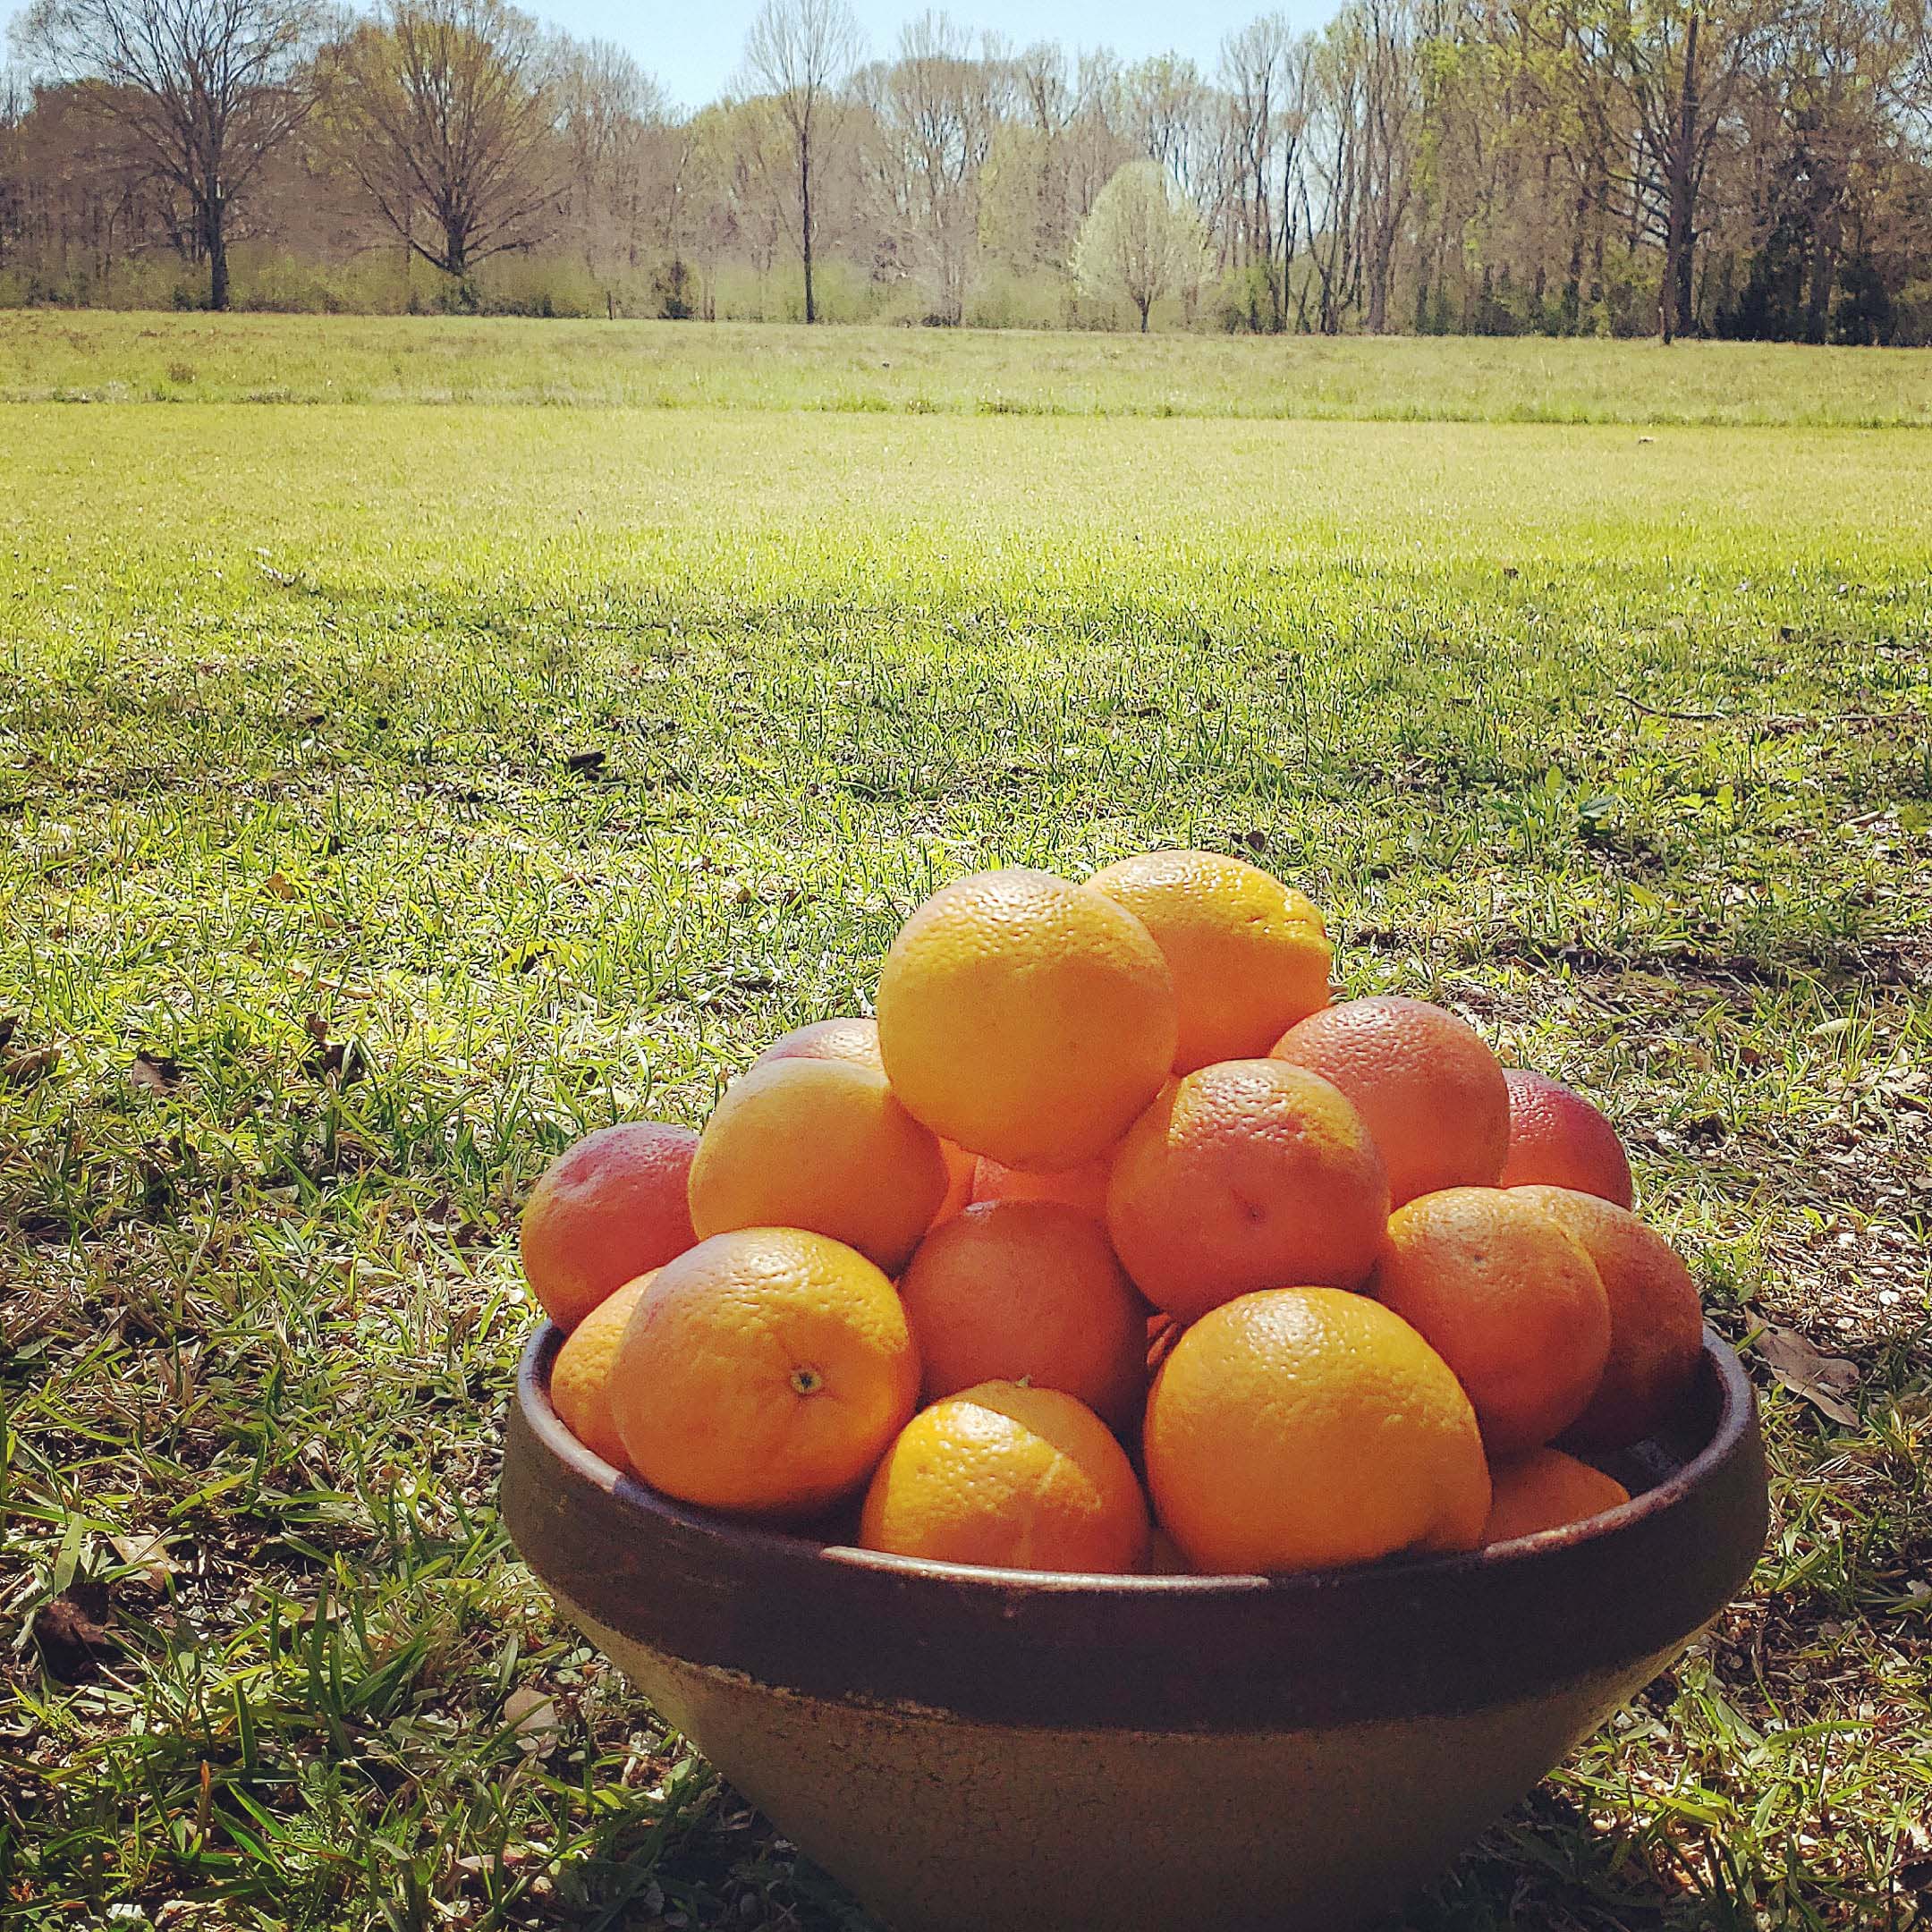 oranges in bowl in a field